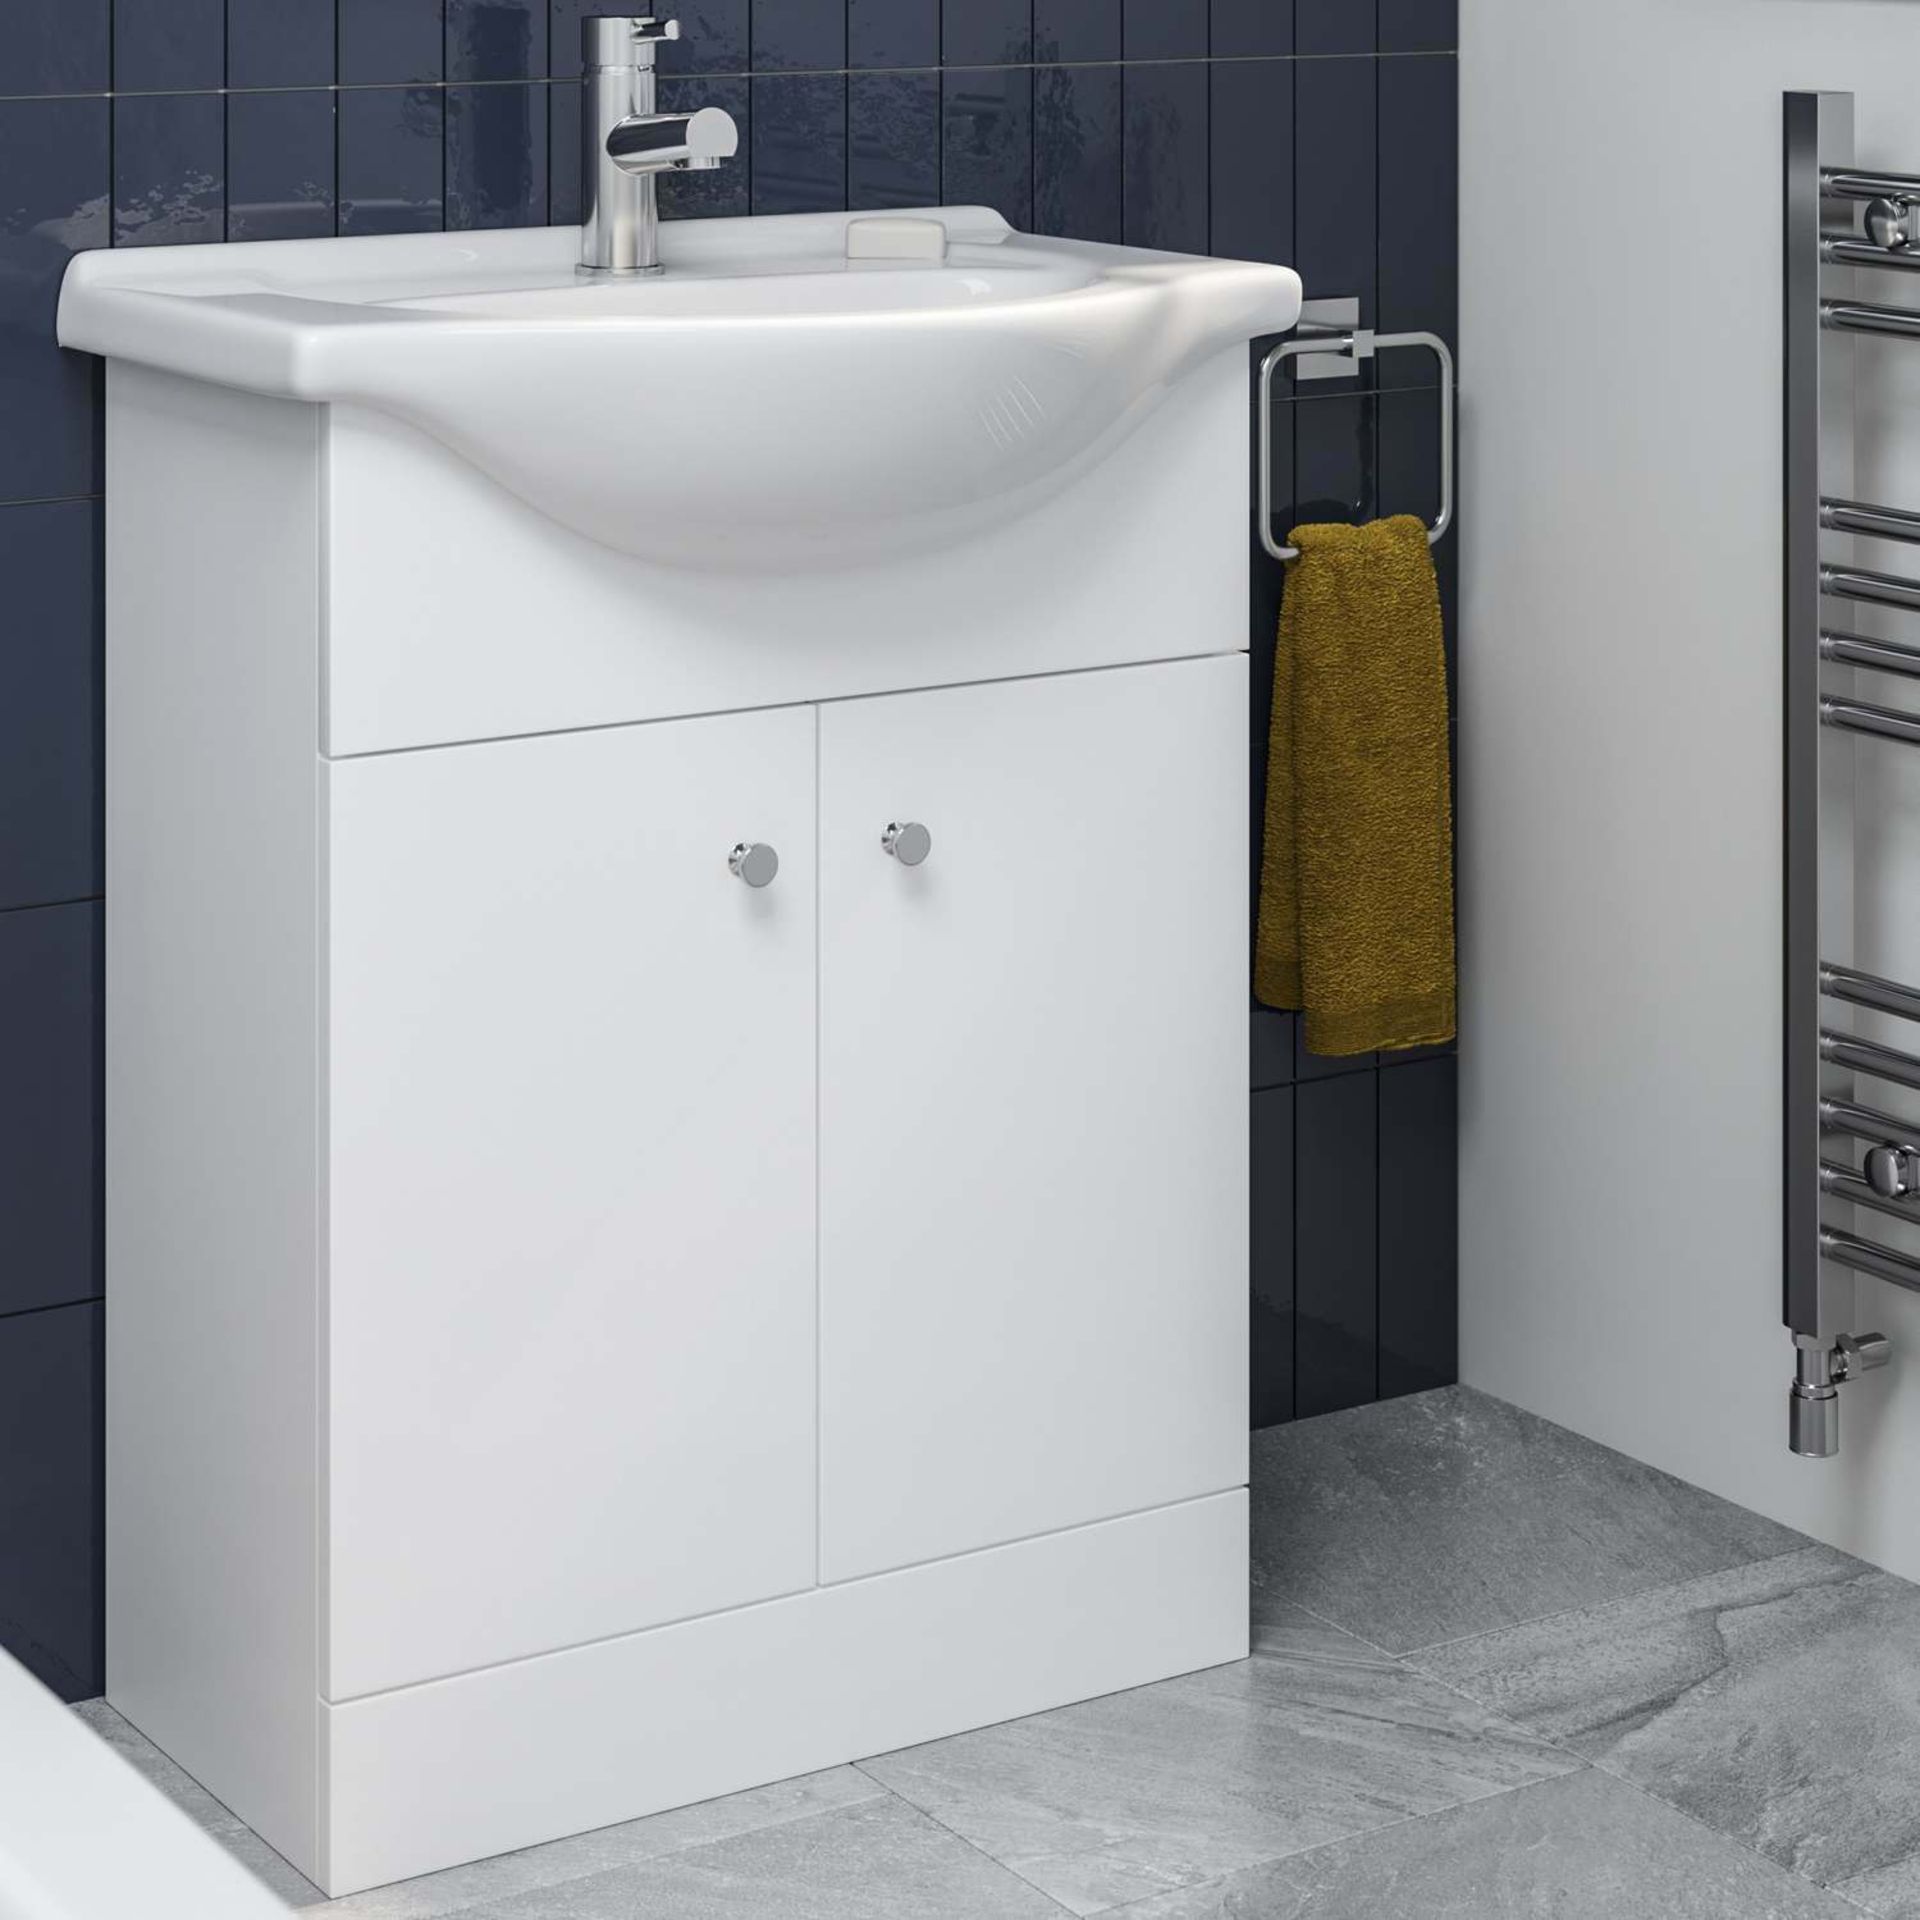 650mm Quartz White Basin Vanity Unit- Floor Standing. RRP £399.99. Comes complete with basin. ...